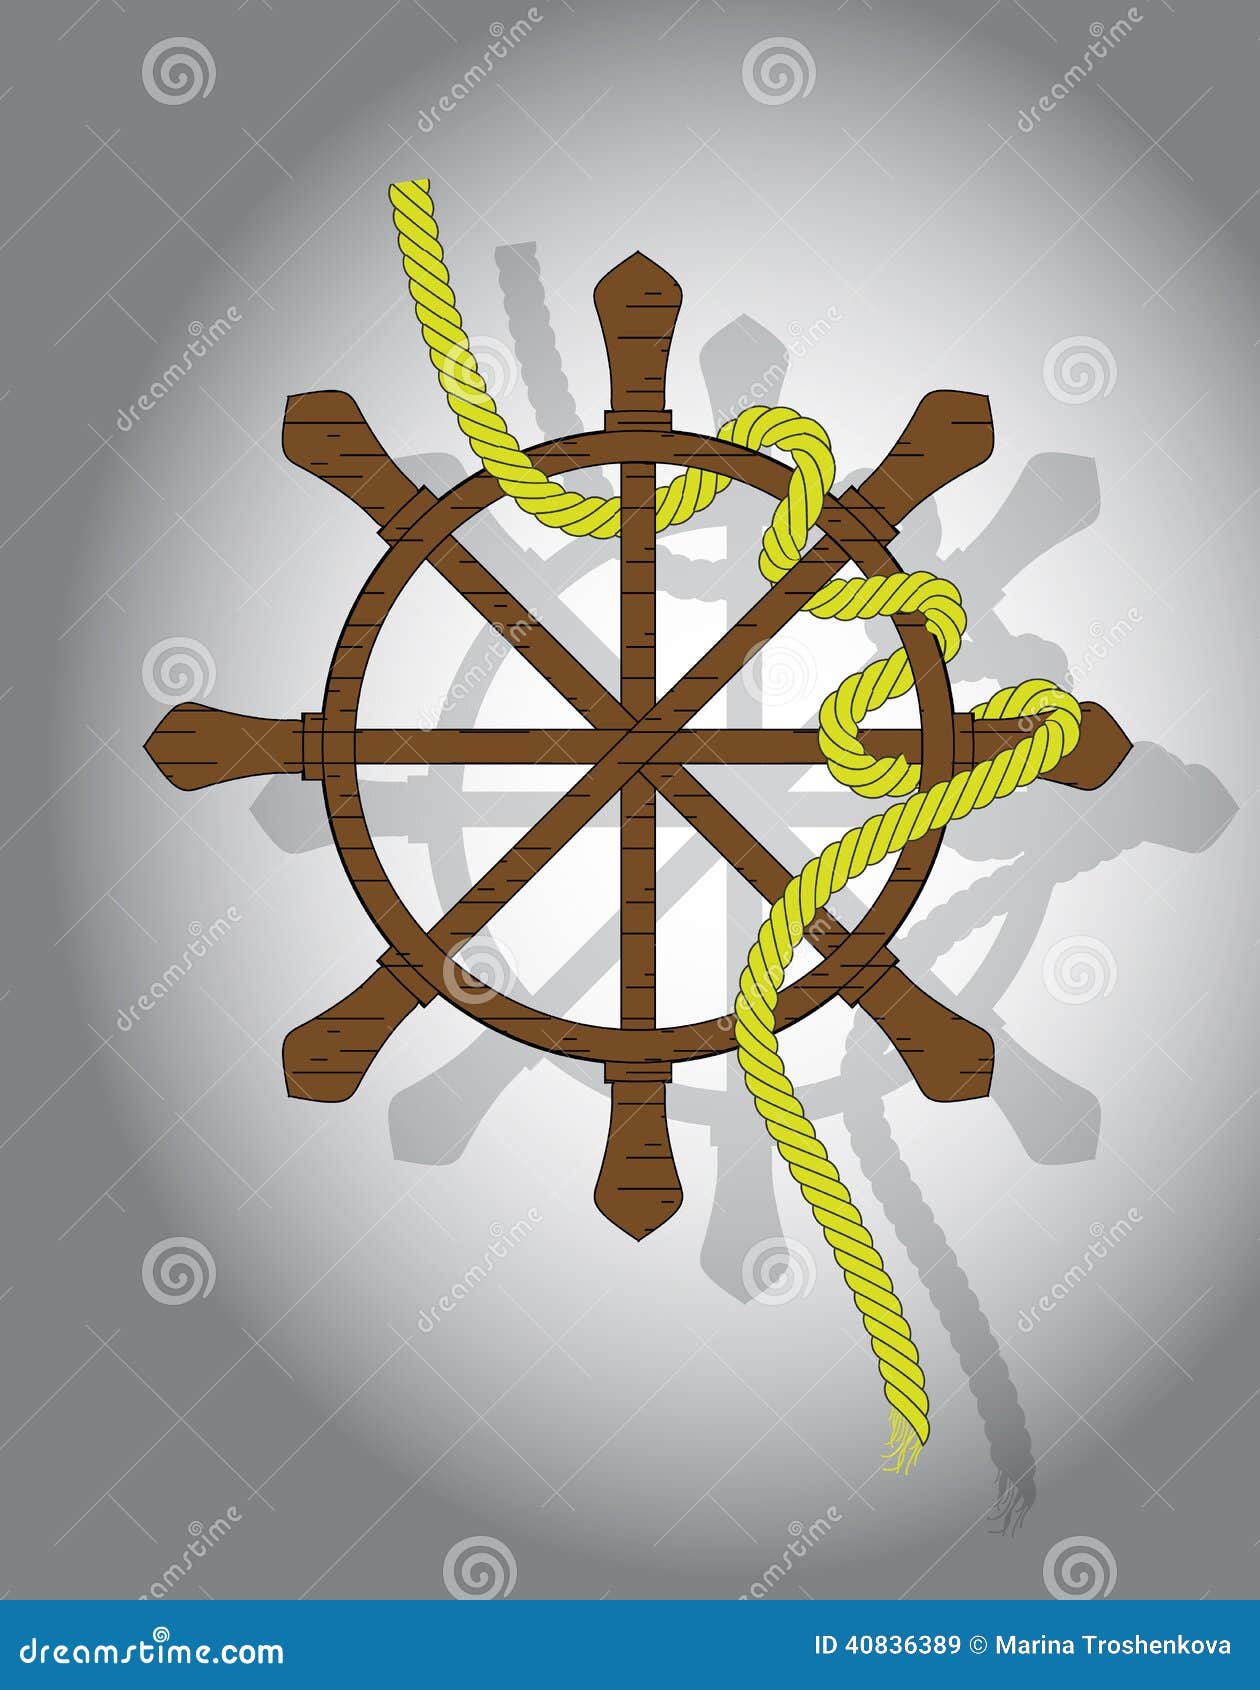 Ship wheel stock vector. Illustration of industrial, shadow - 40836389